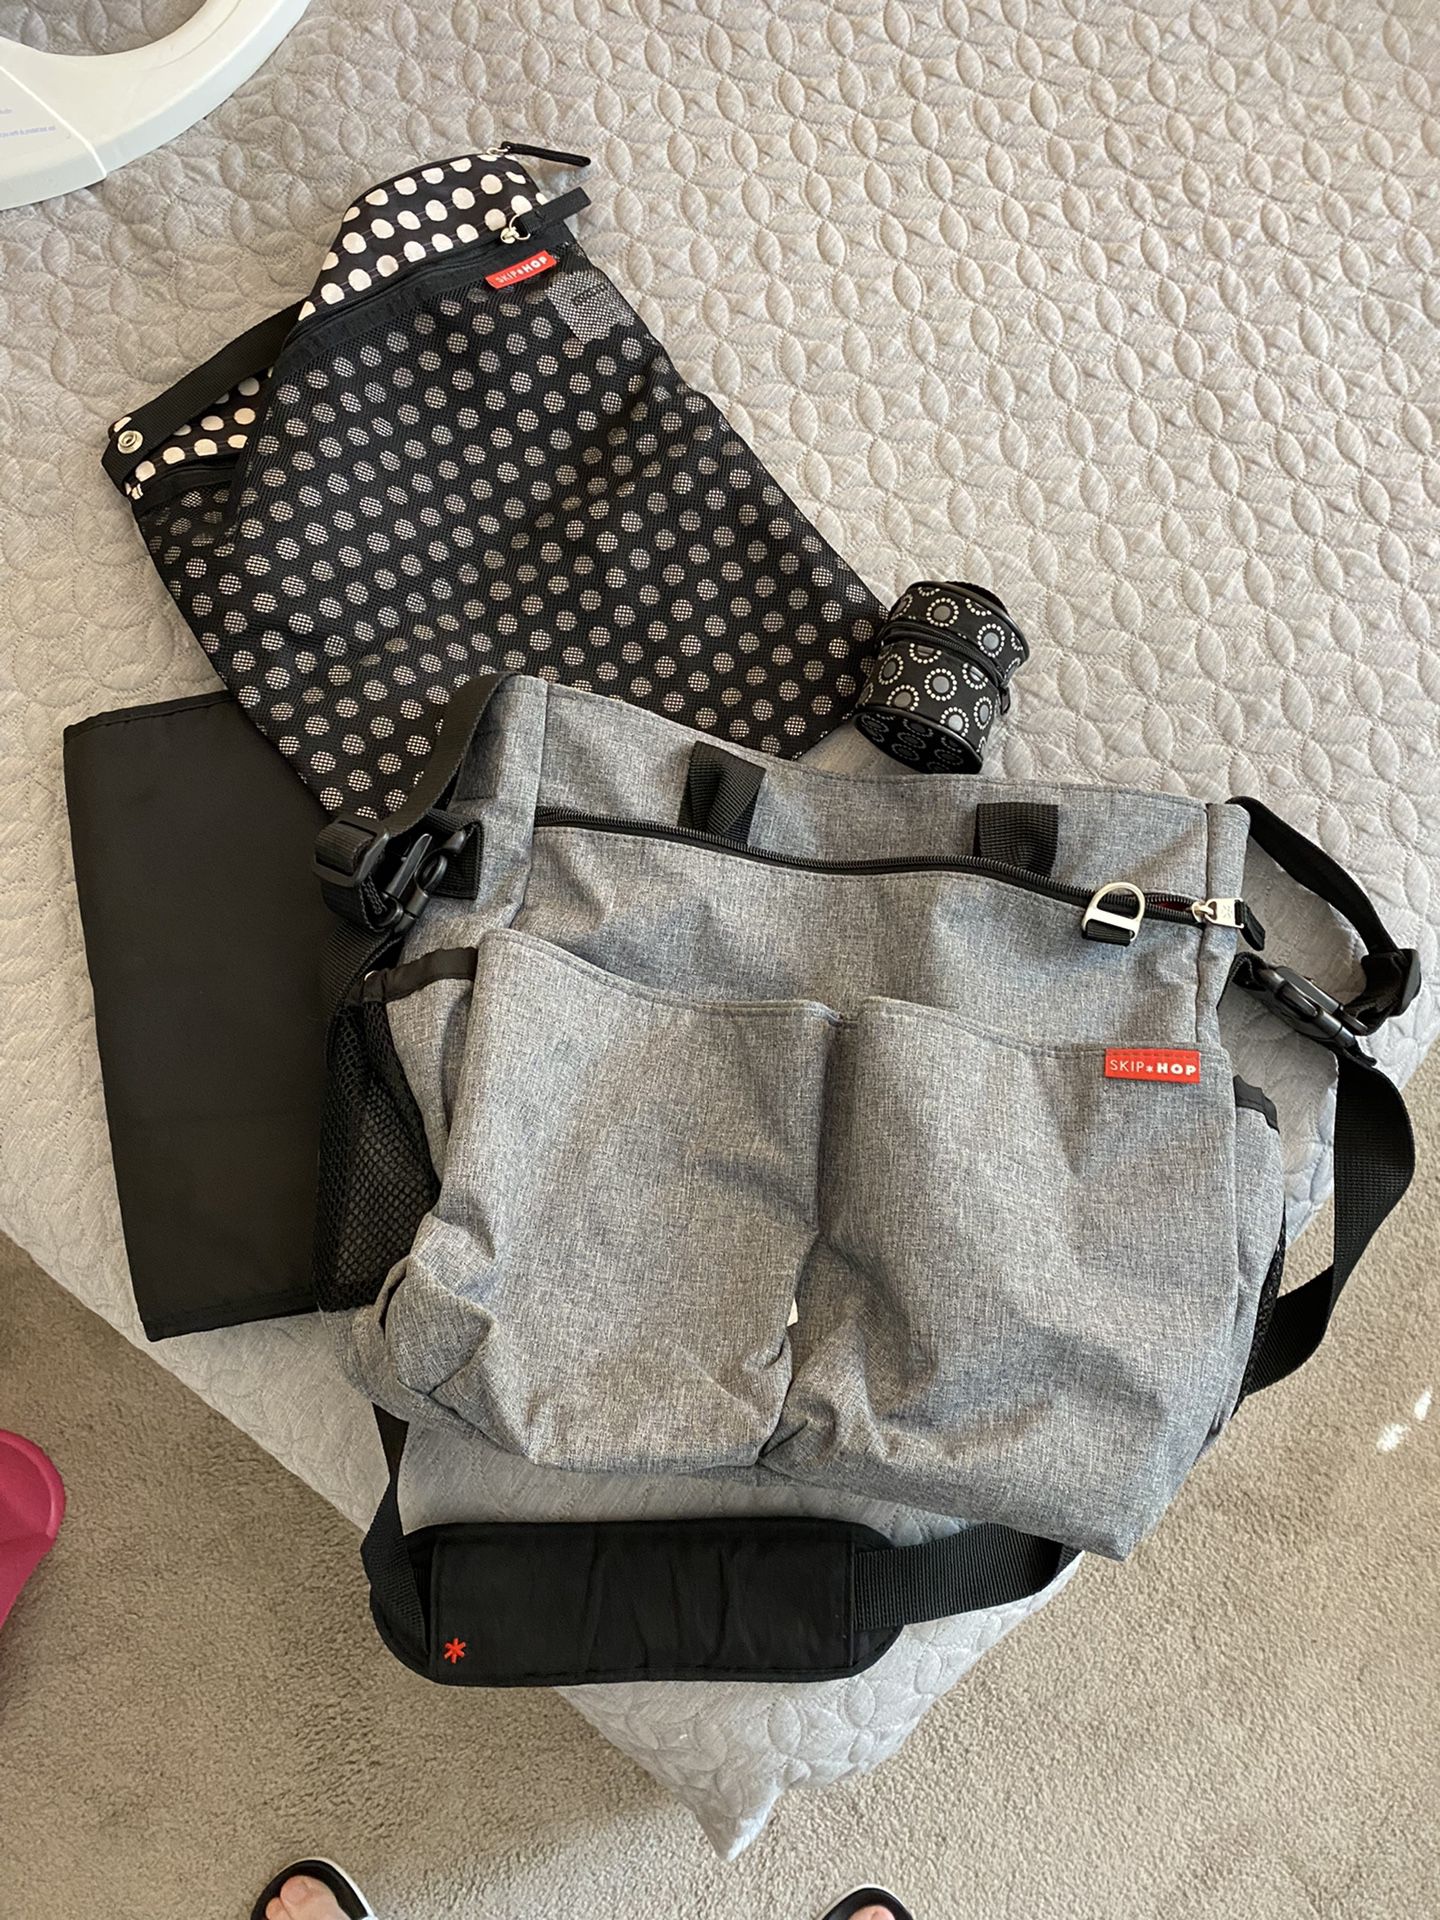 Skip Hop Diaper Bag Kit (4-Piece) - Very clean